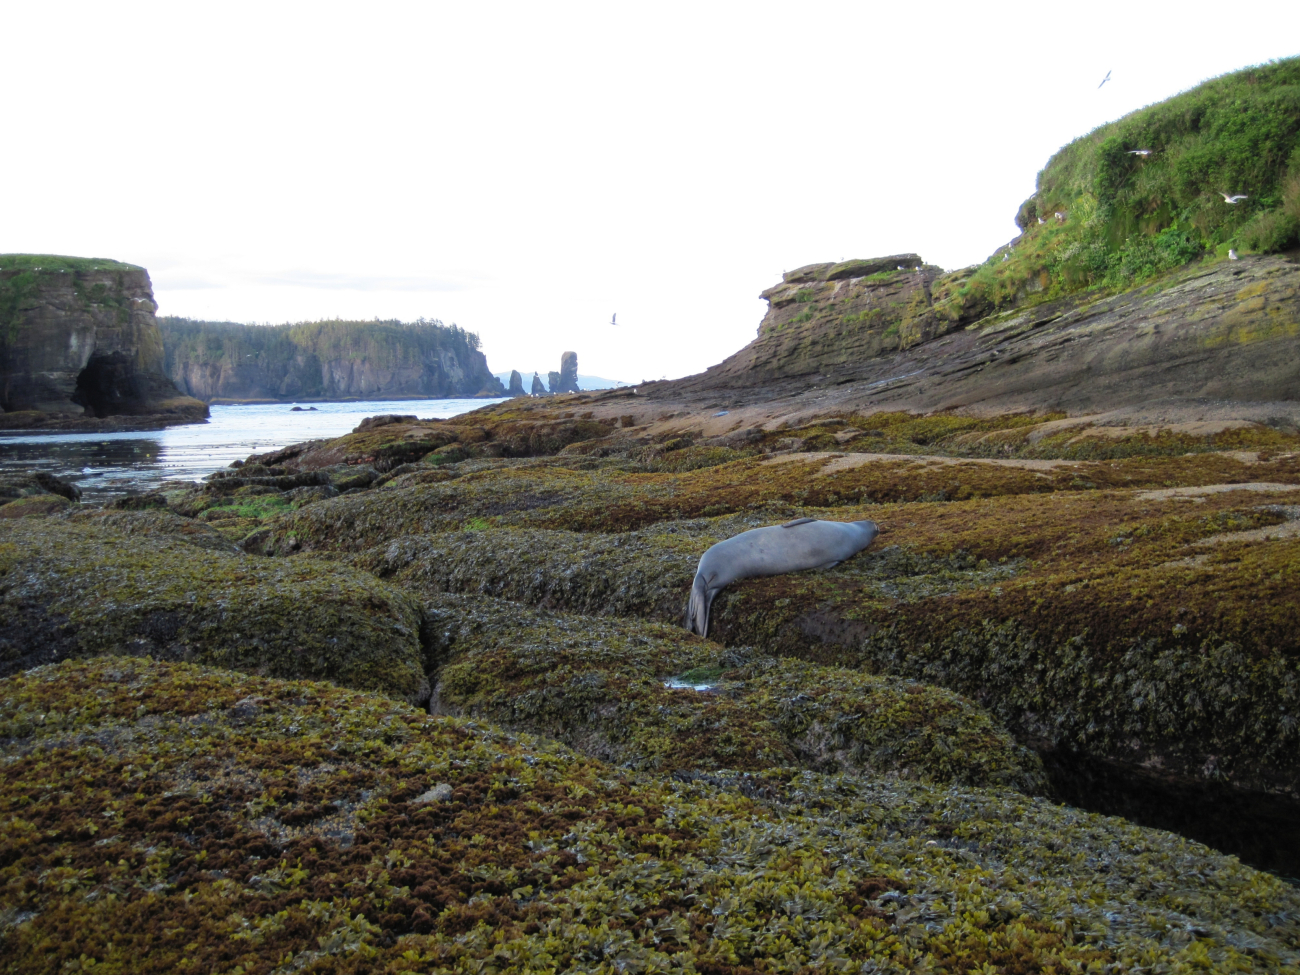 Sea lion at low tide on algae covered ledges